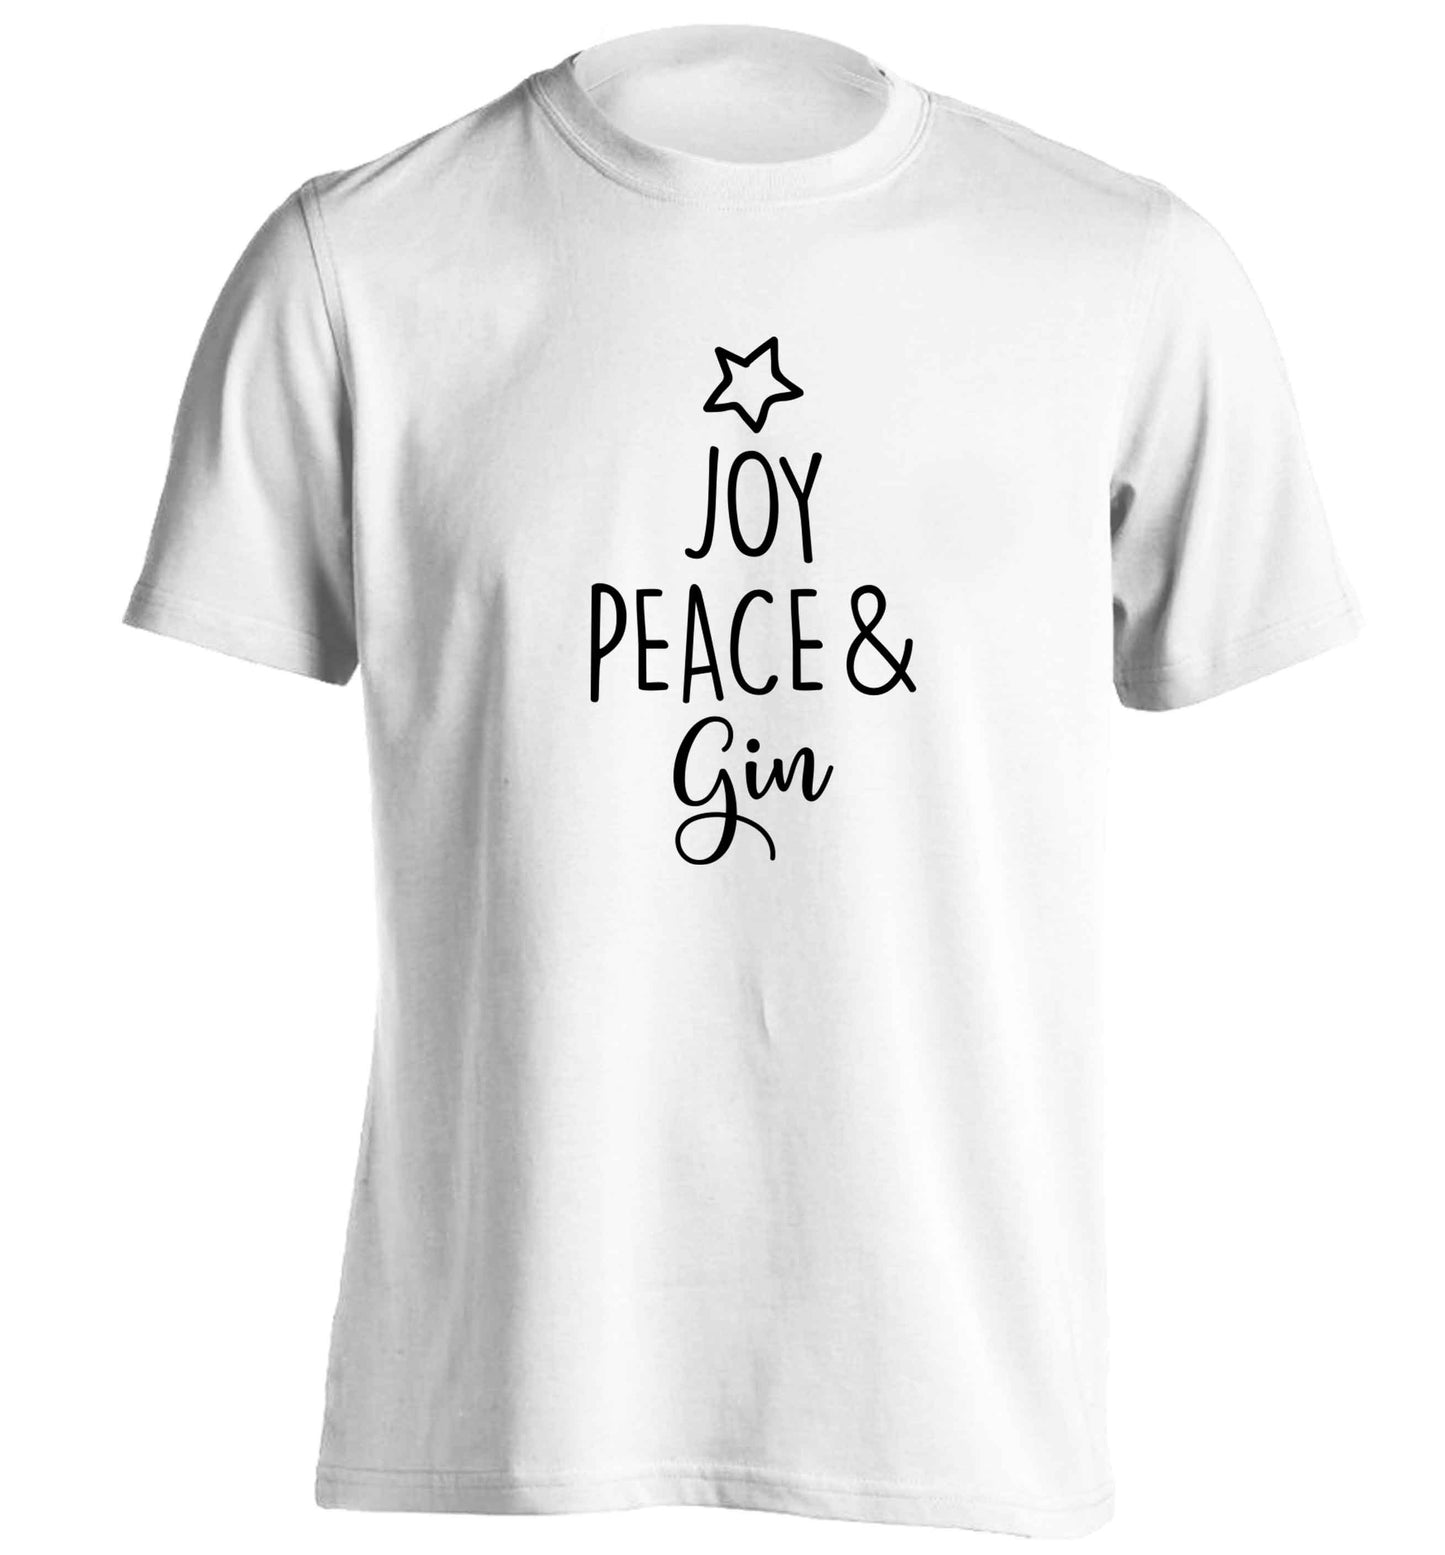 Joy peace and gin adults unisex white Tshirt 2XL